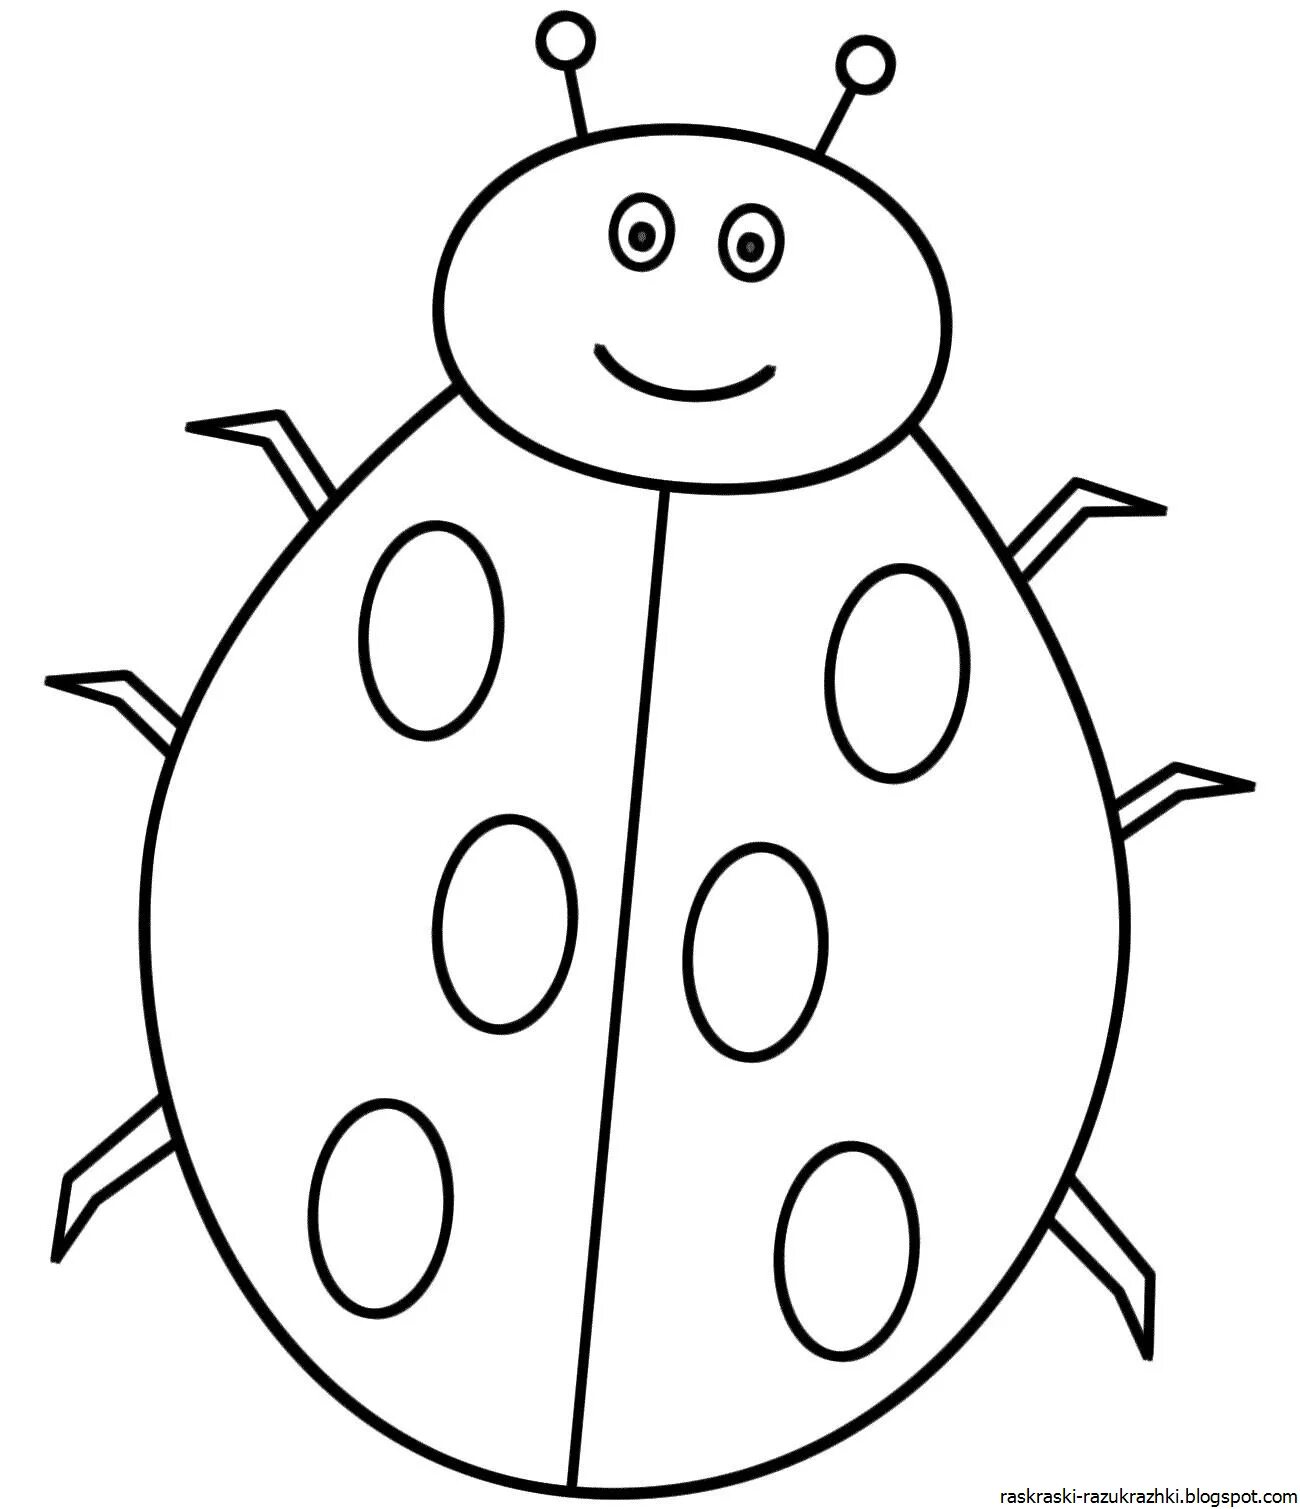 Adorable ladybug coloring book for kids